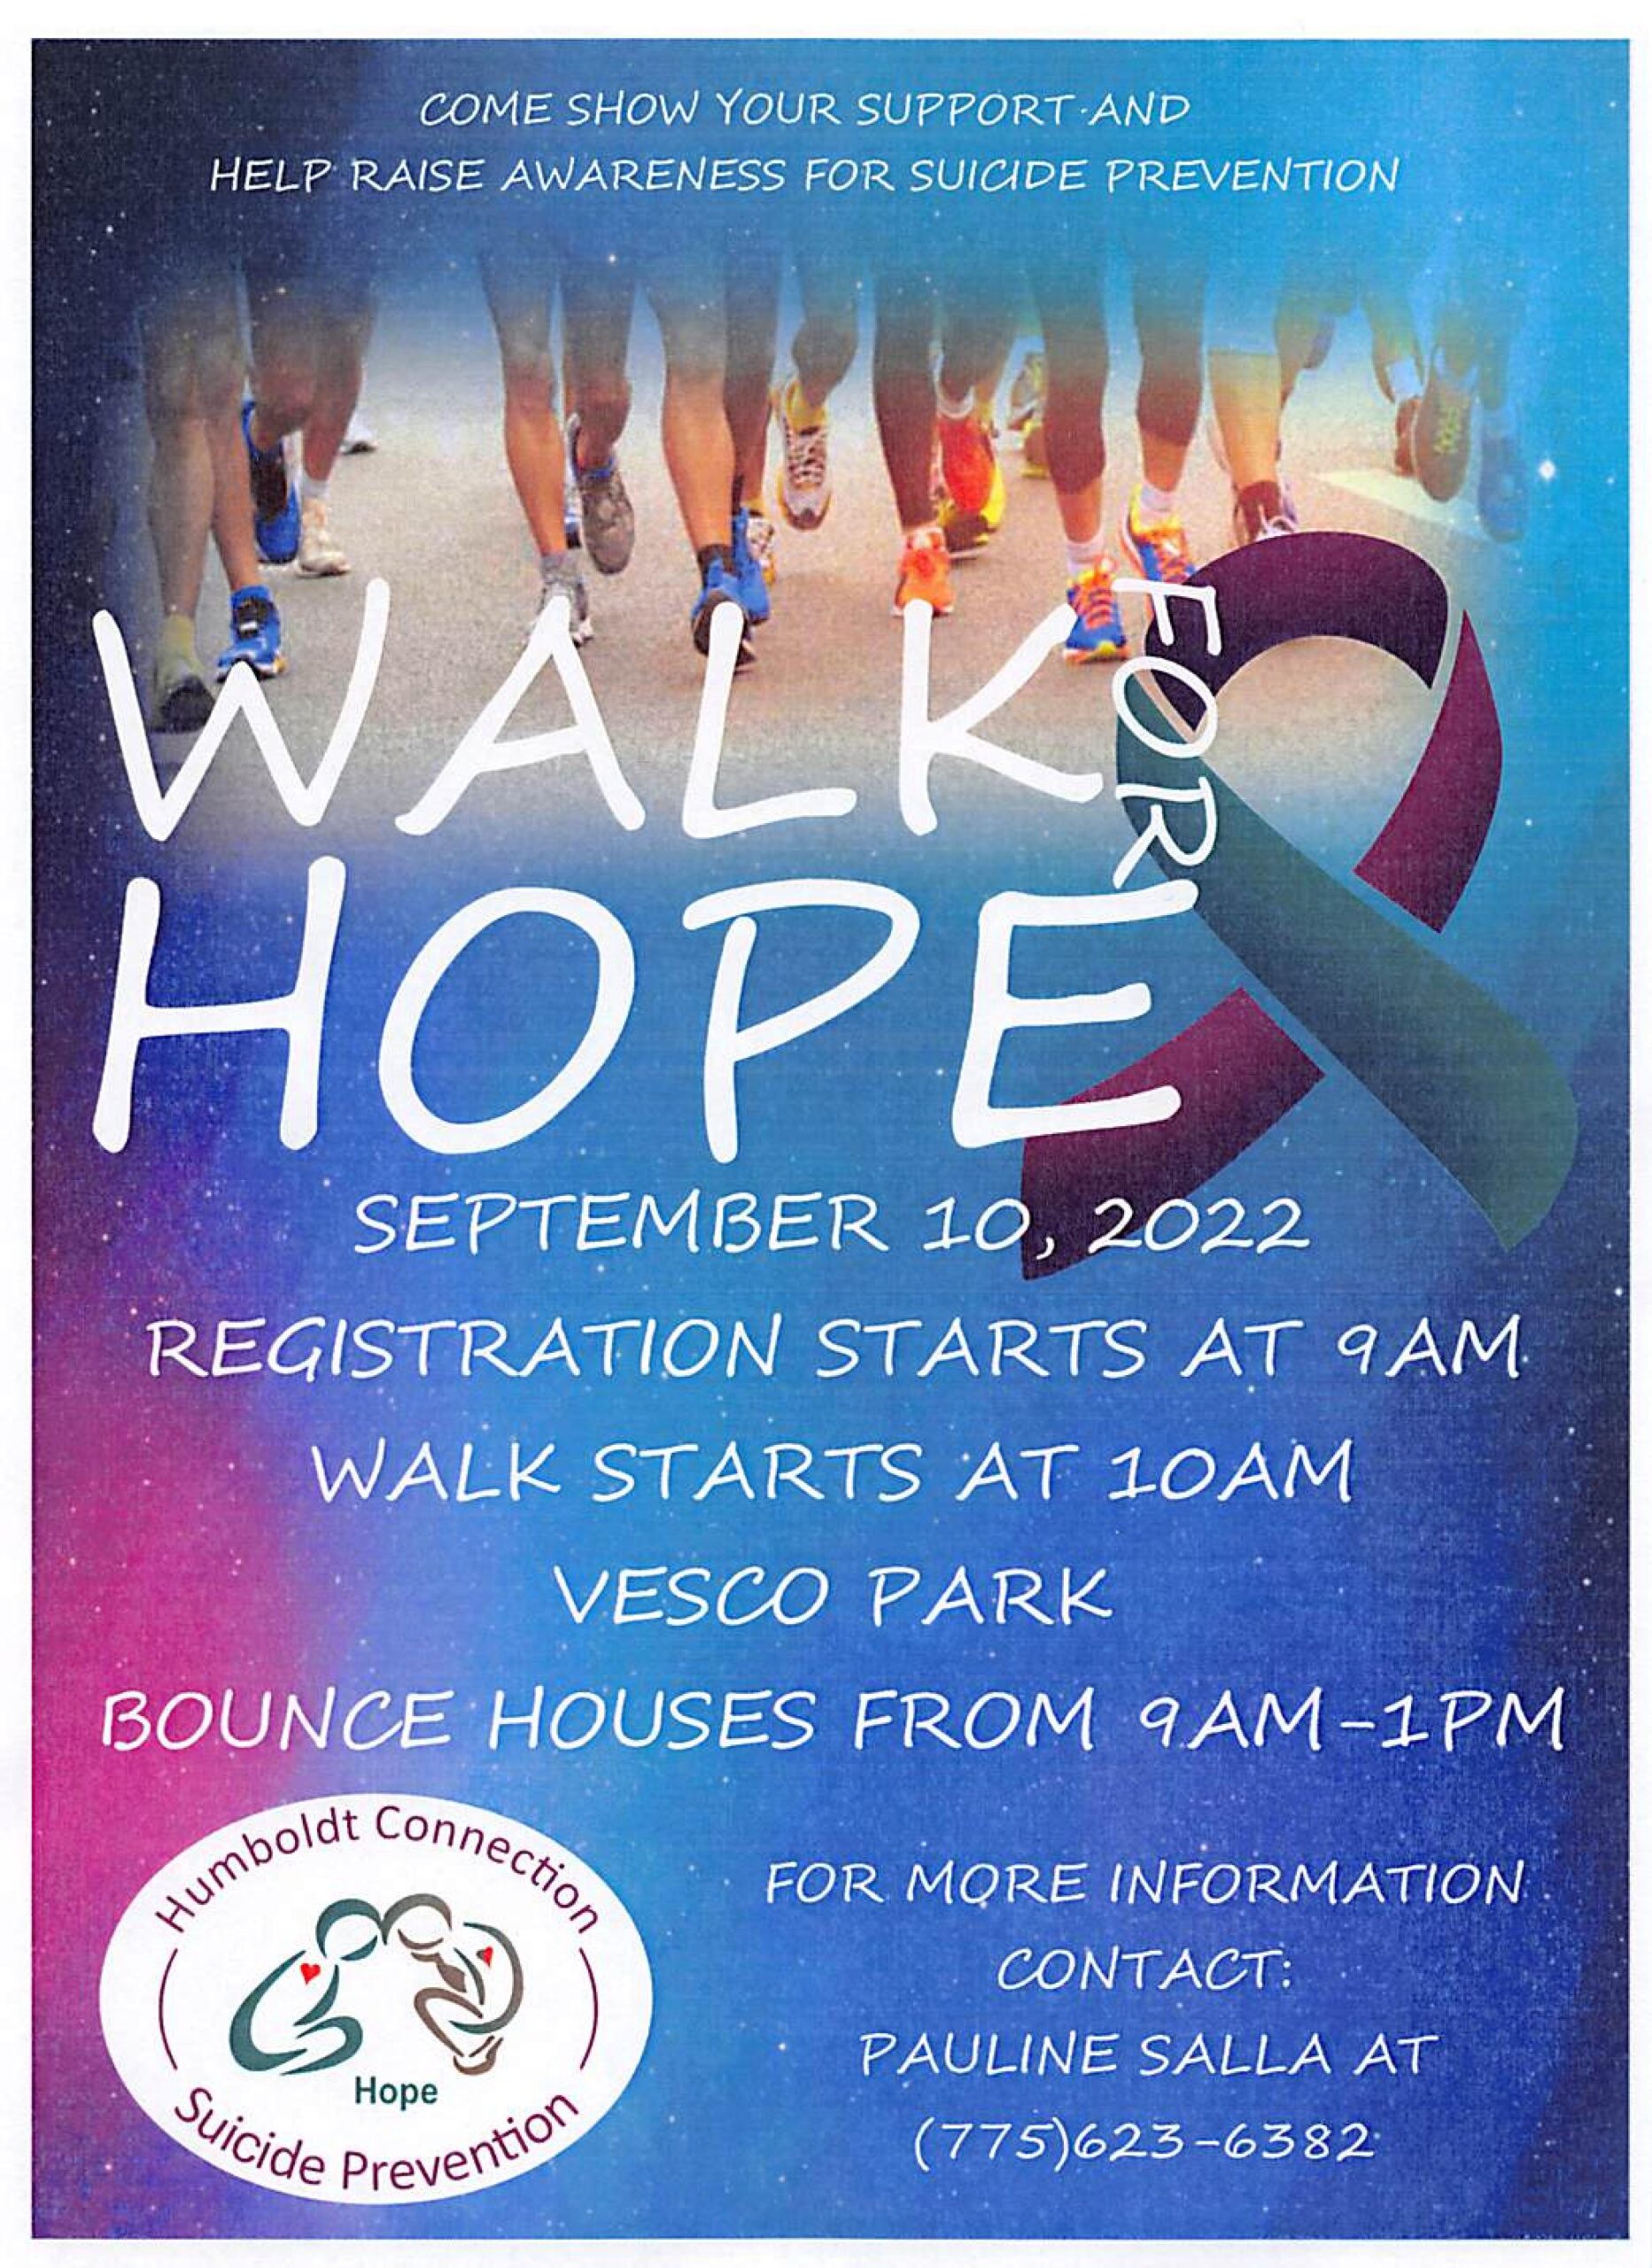 Walk in Memory Walk in Hope is this Saturday- September 10th